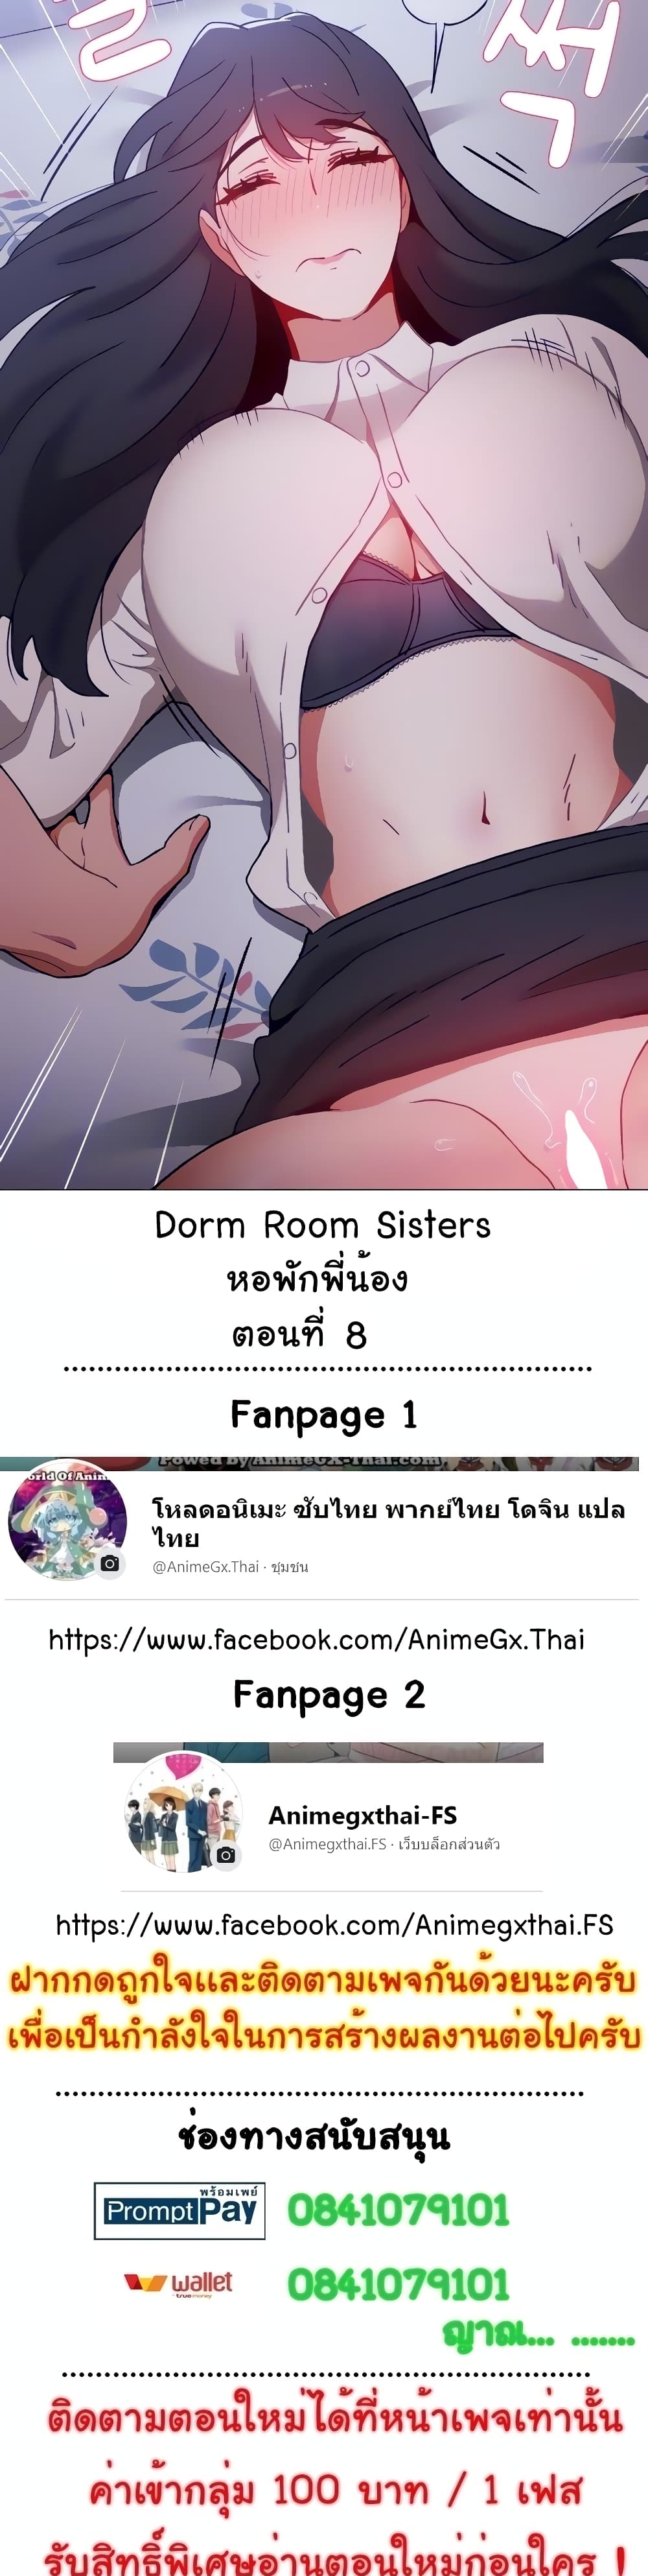 Dorm Room Sisters 8-8